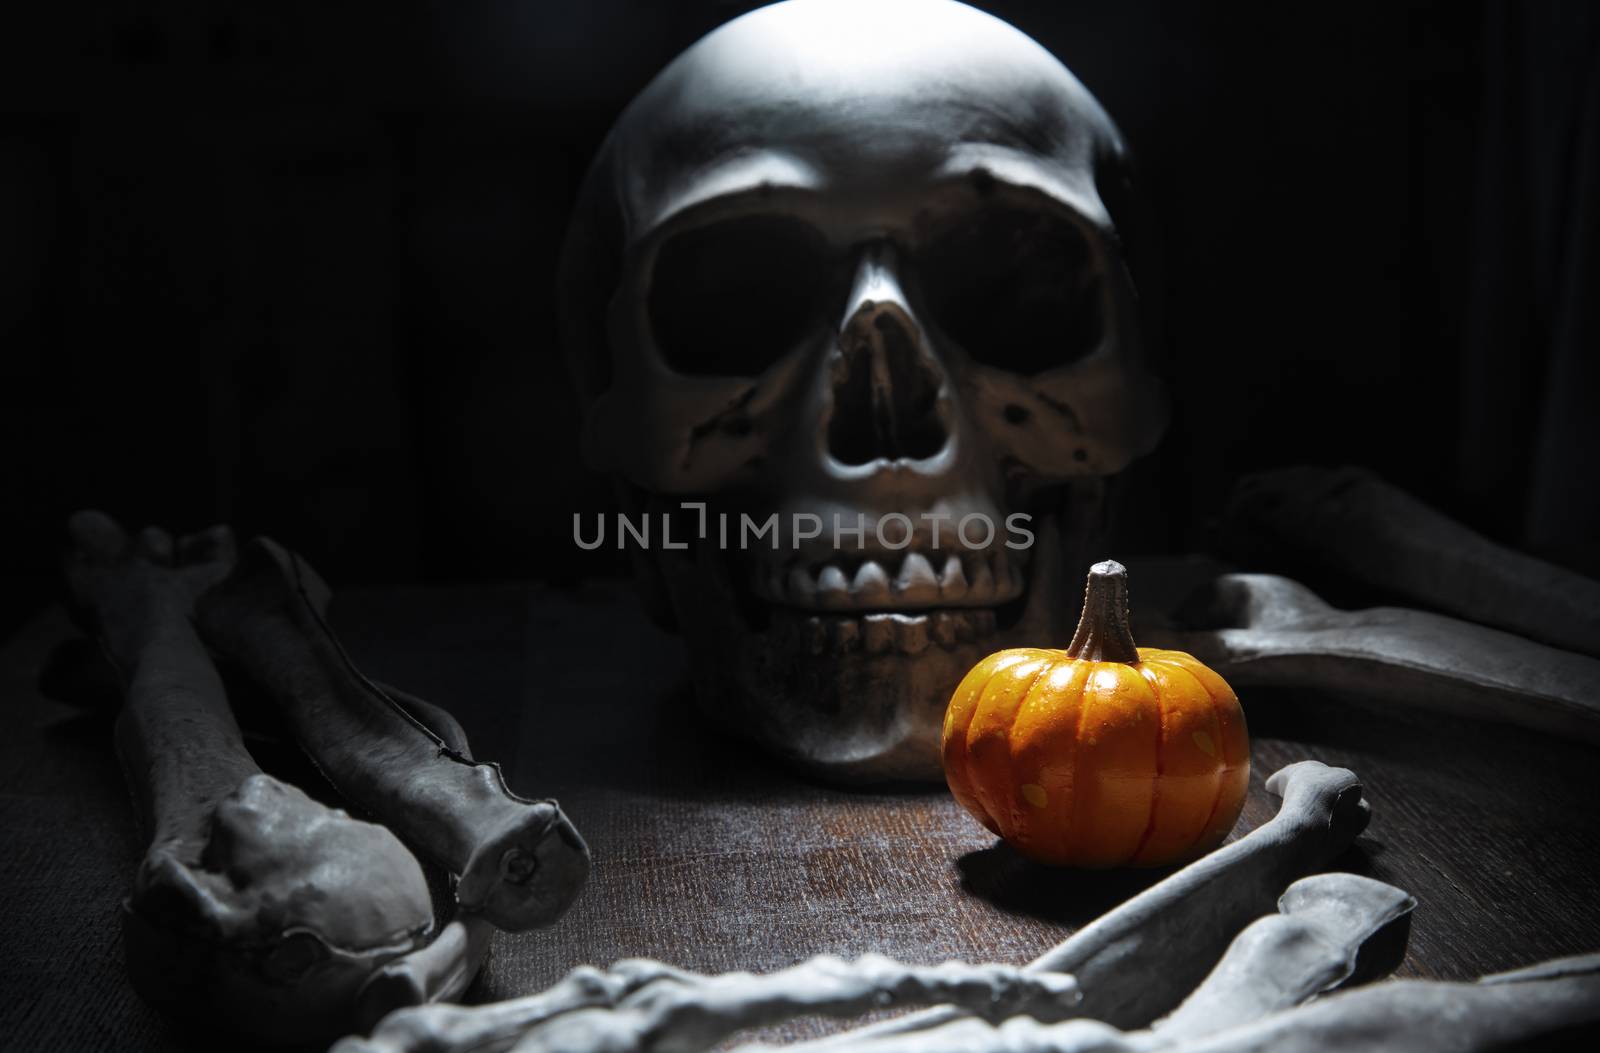 Human bones and skull on the table with Halloween pumpkin